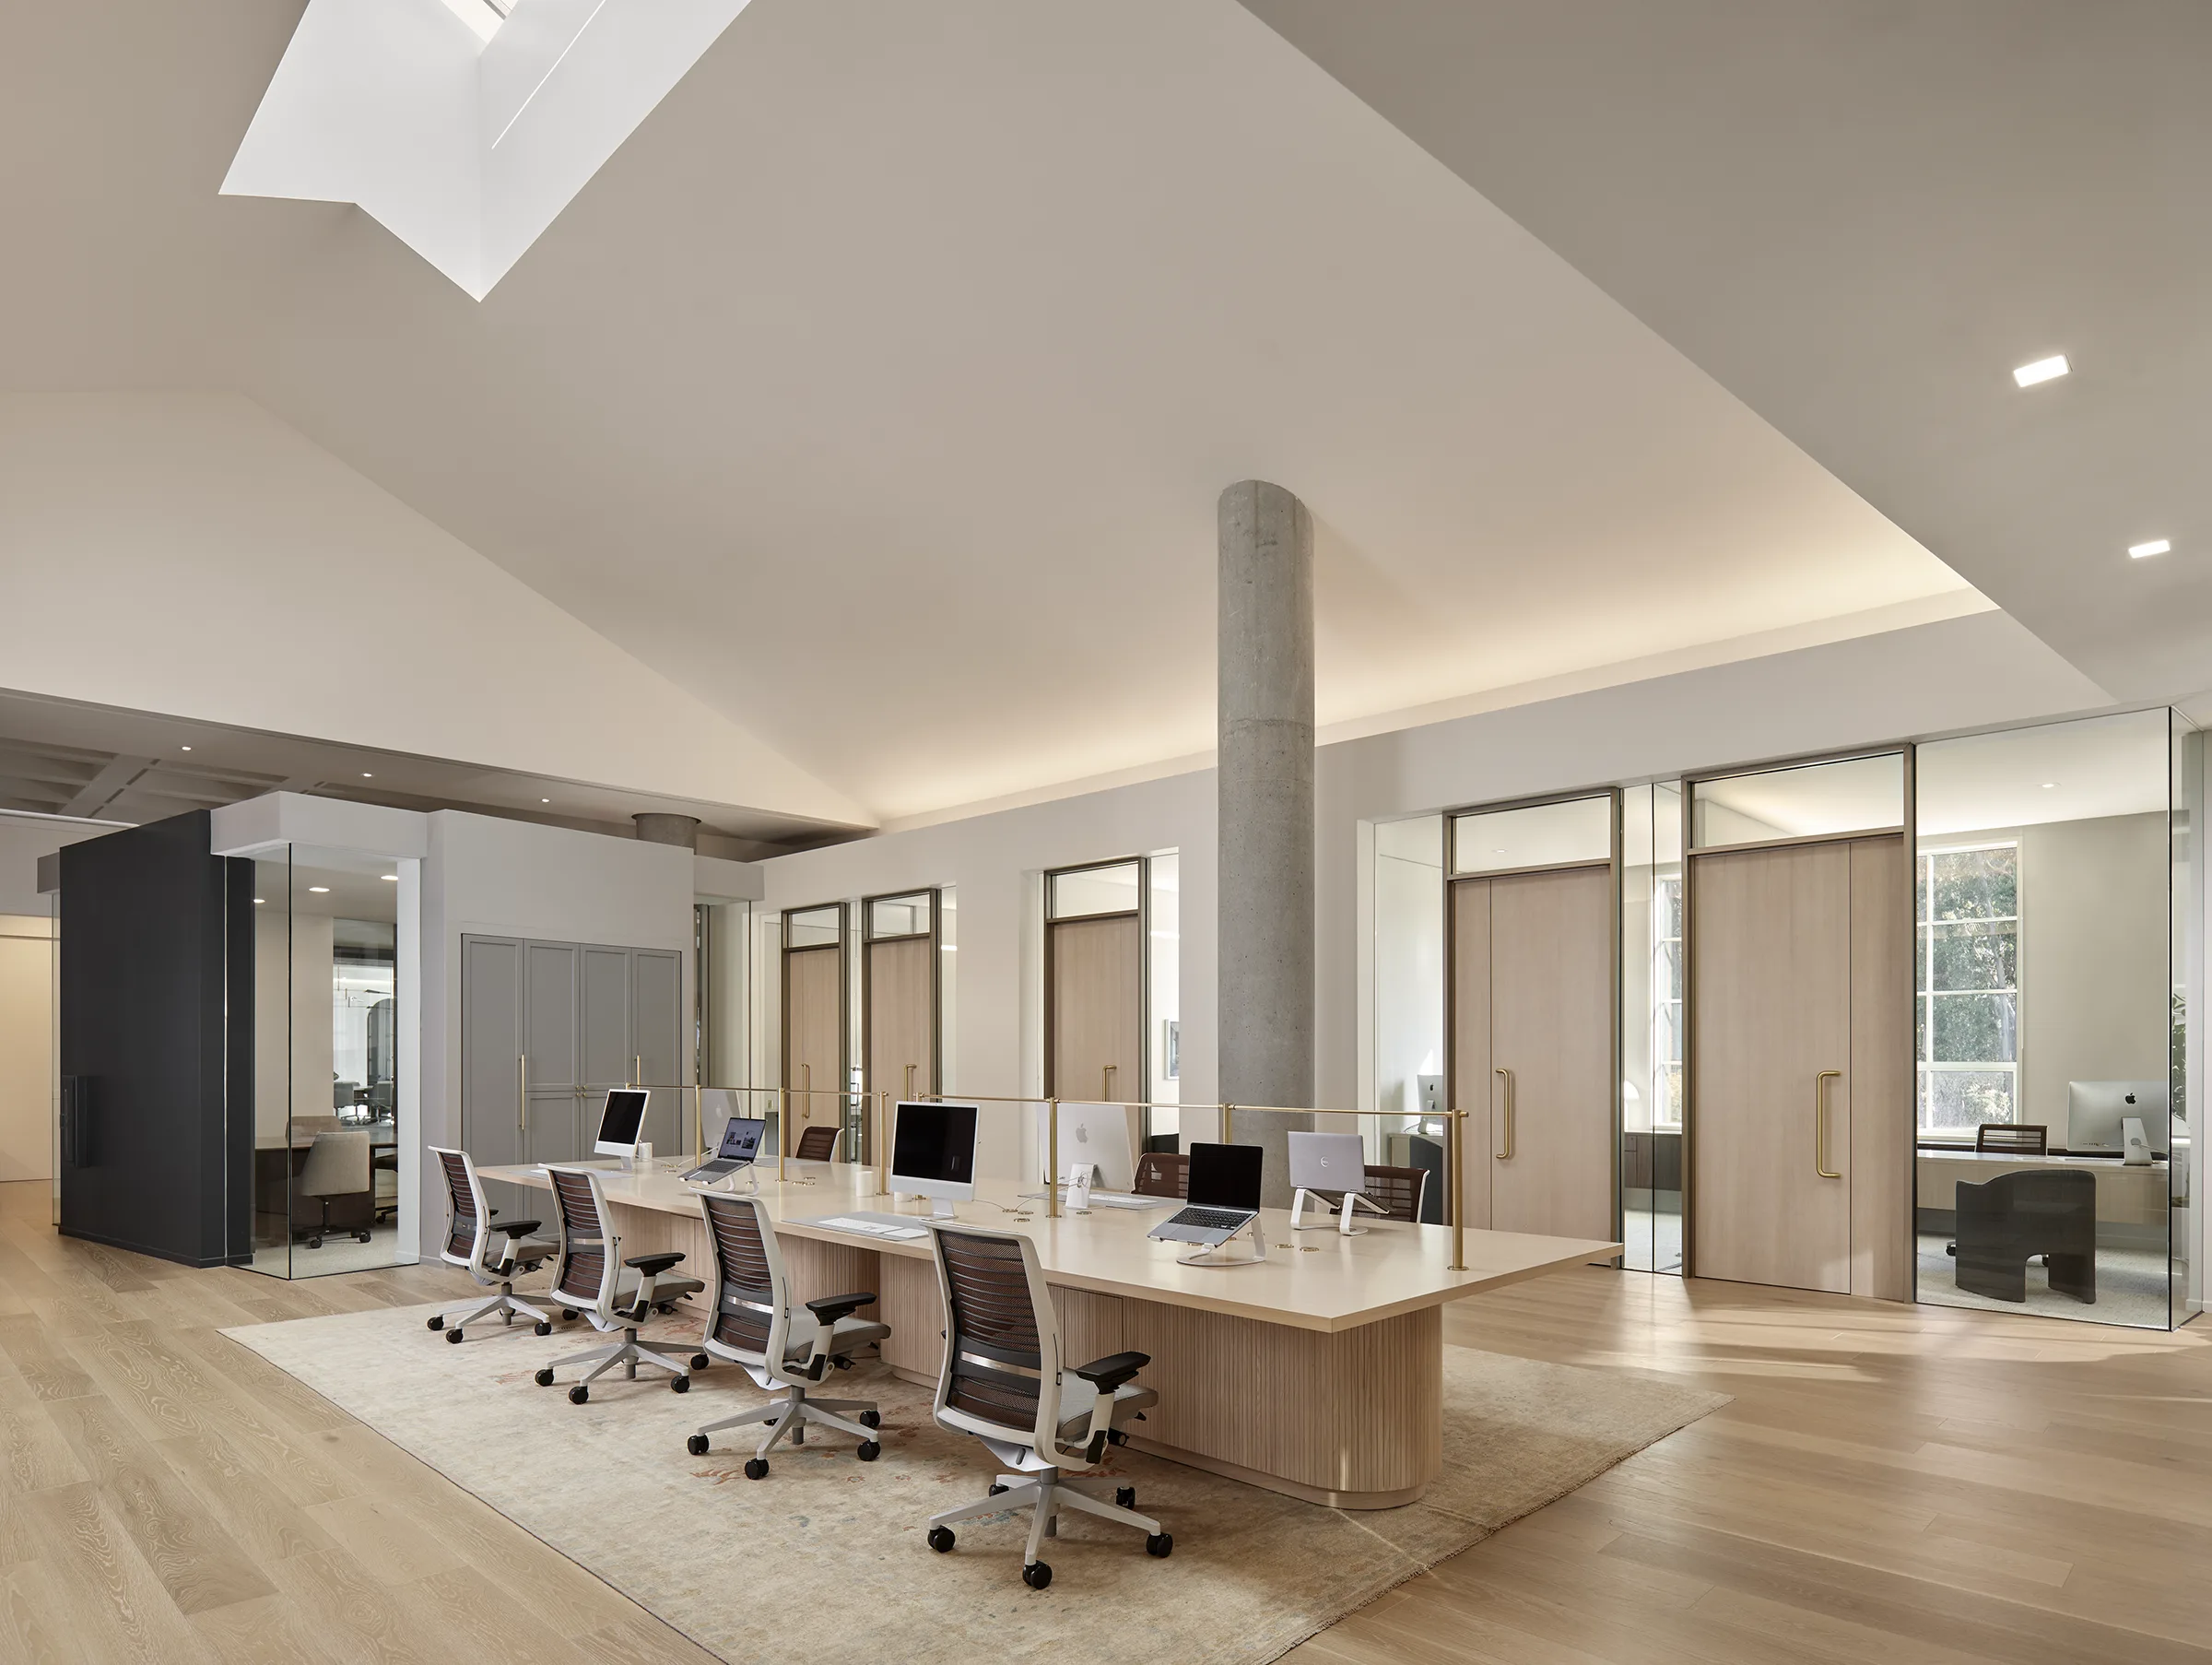 Office with engineered wood flooring